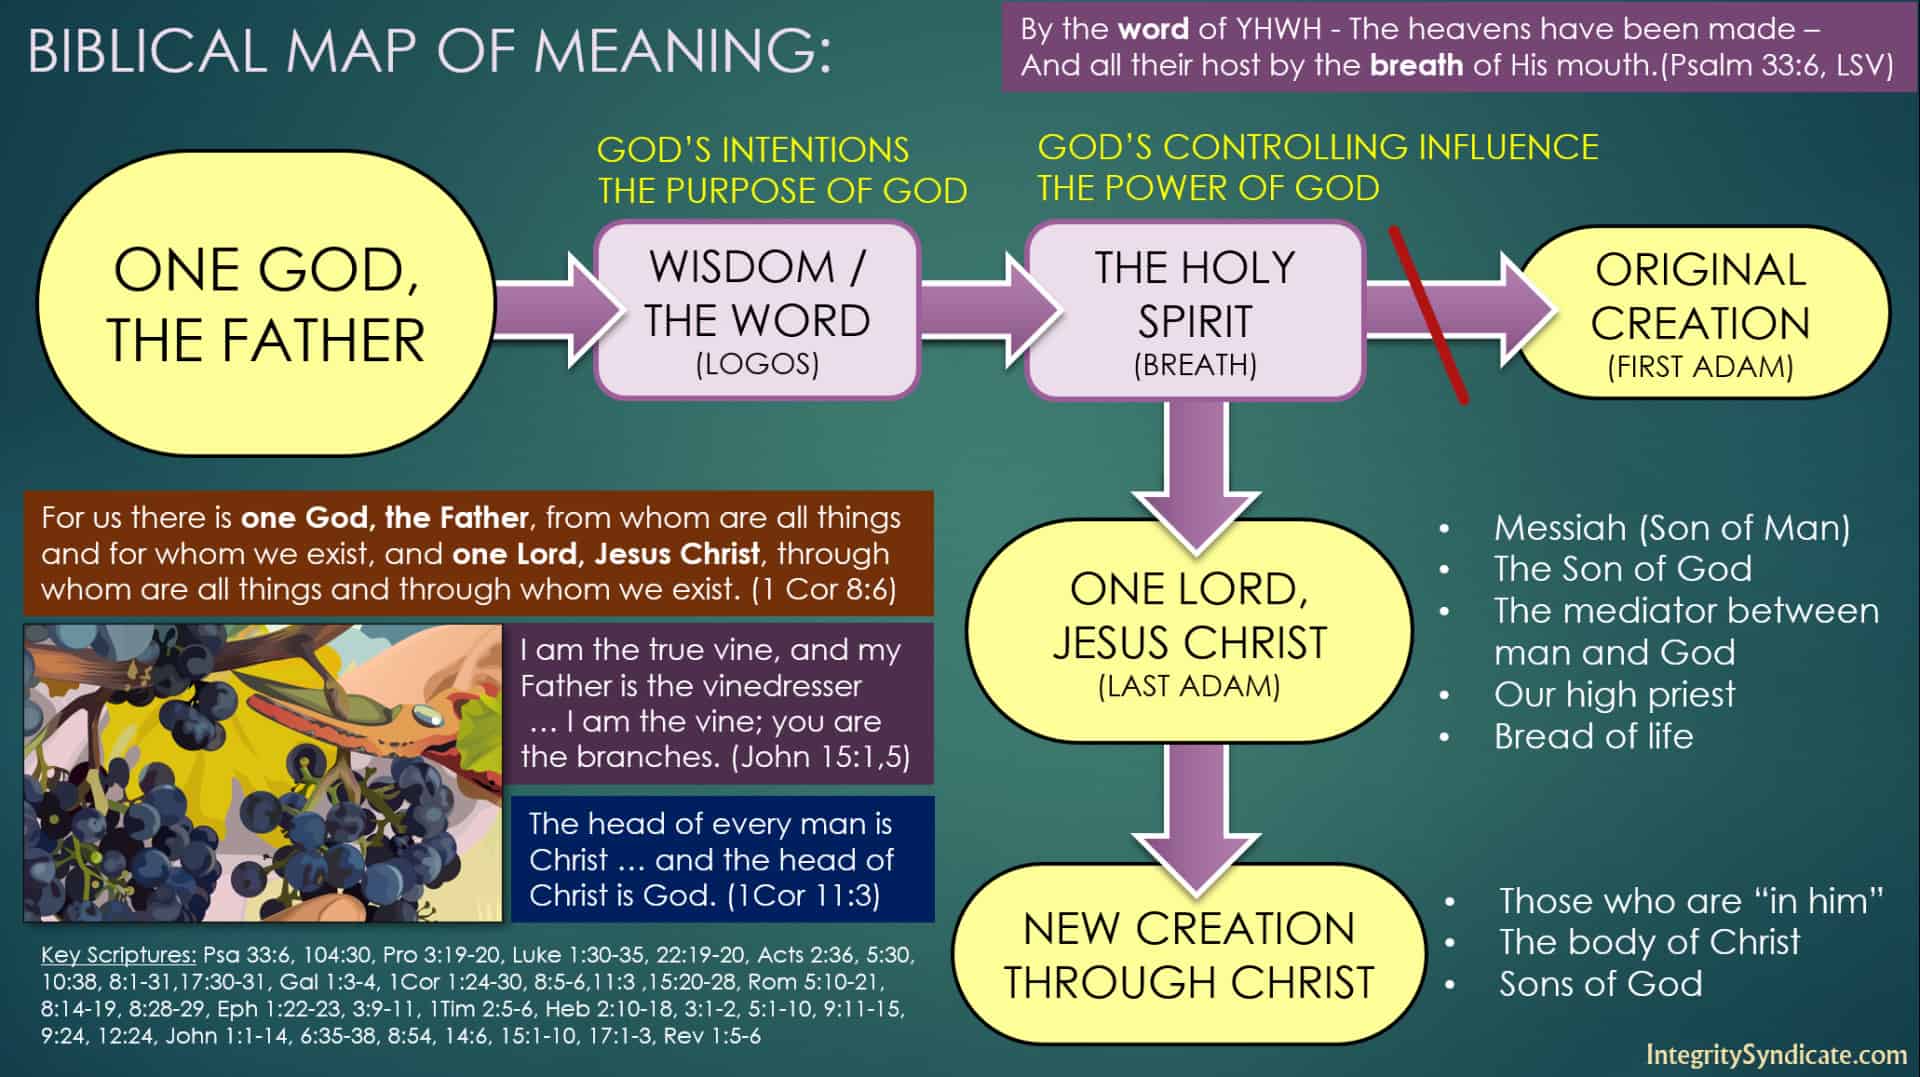 Biblical Map of Meaning trueunitarian.com